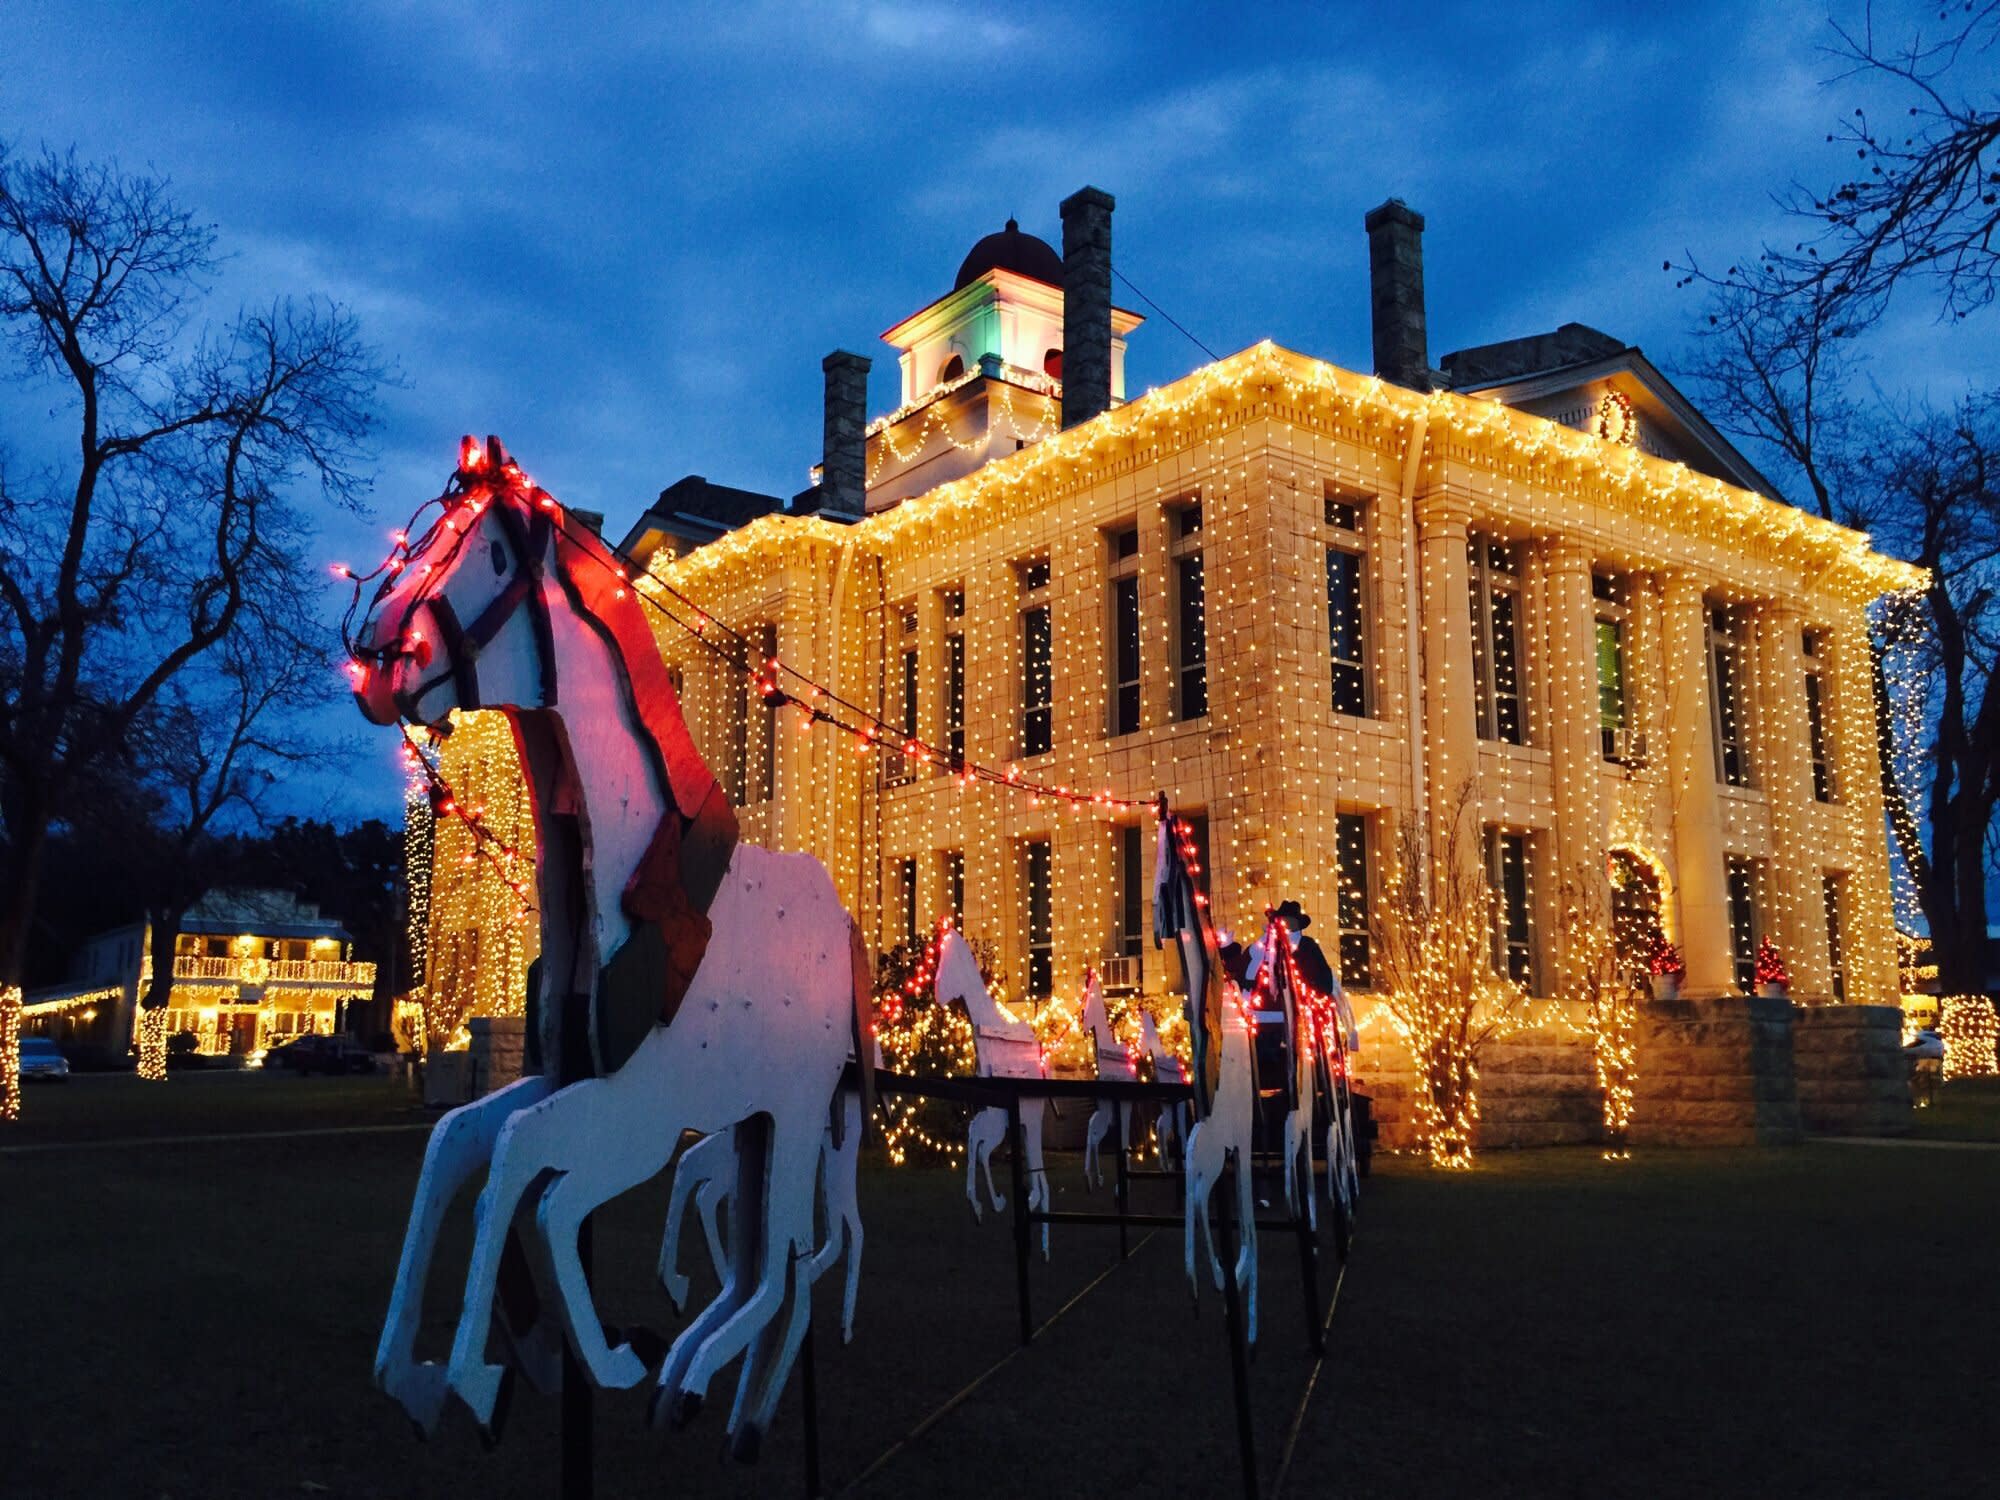 The DriveThrough Christmas Lights Spectacular in Johnson City, Texas